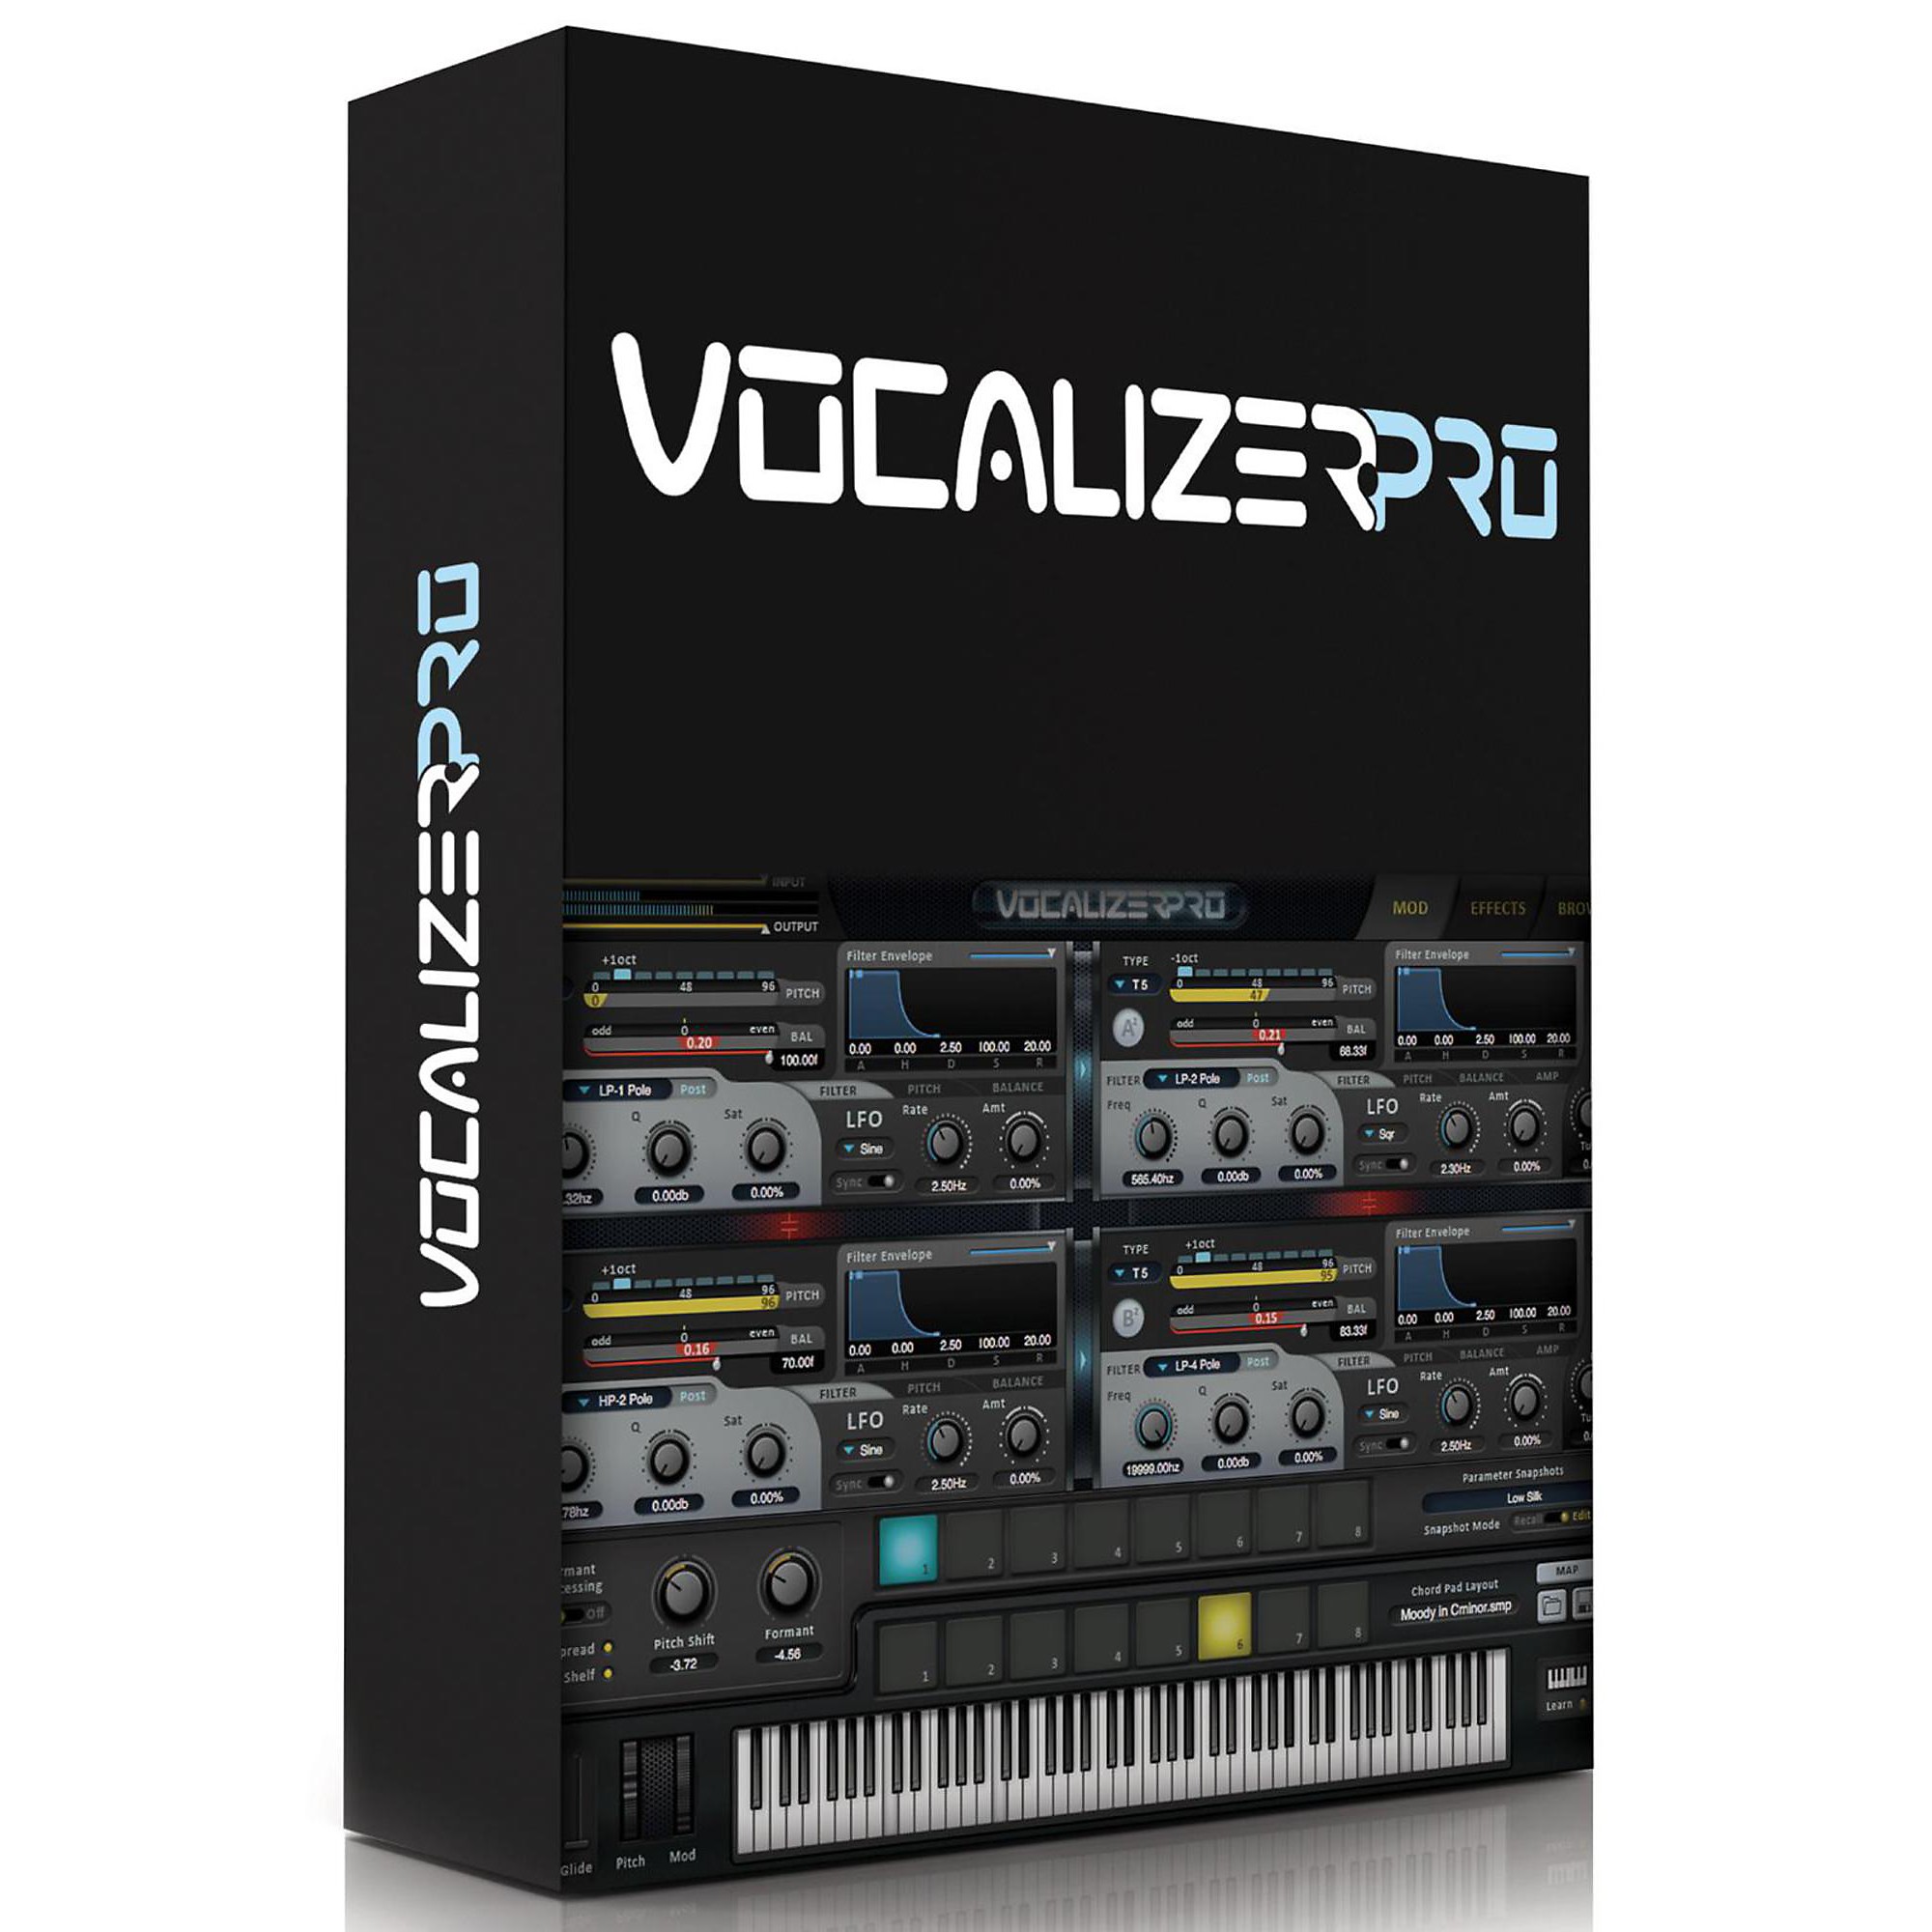 sonivox vocalizer pro free download